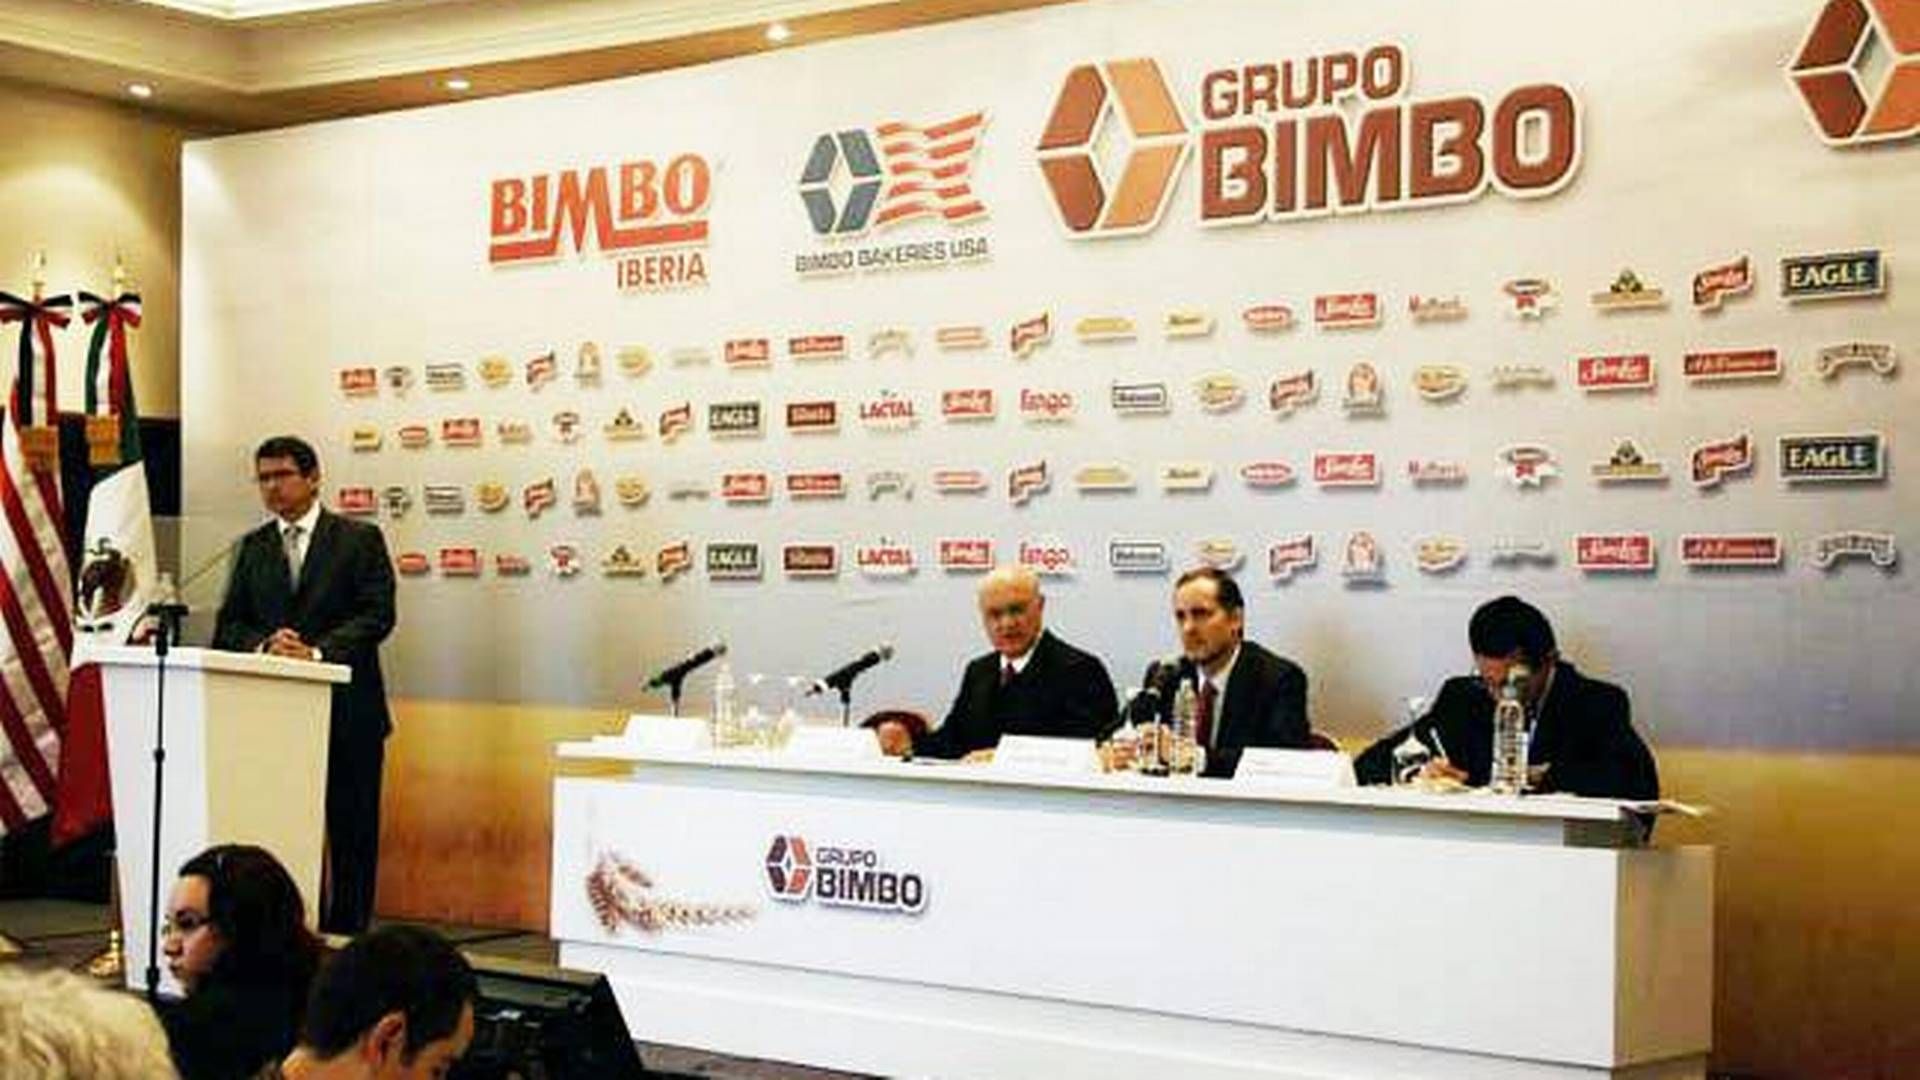 Foto: Grupo Bimbo/ PR